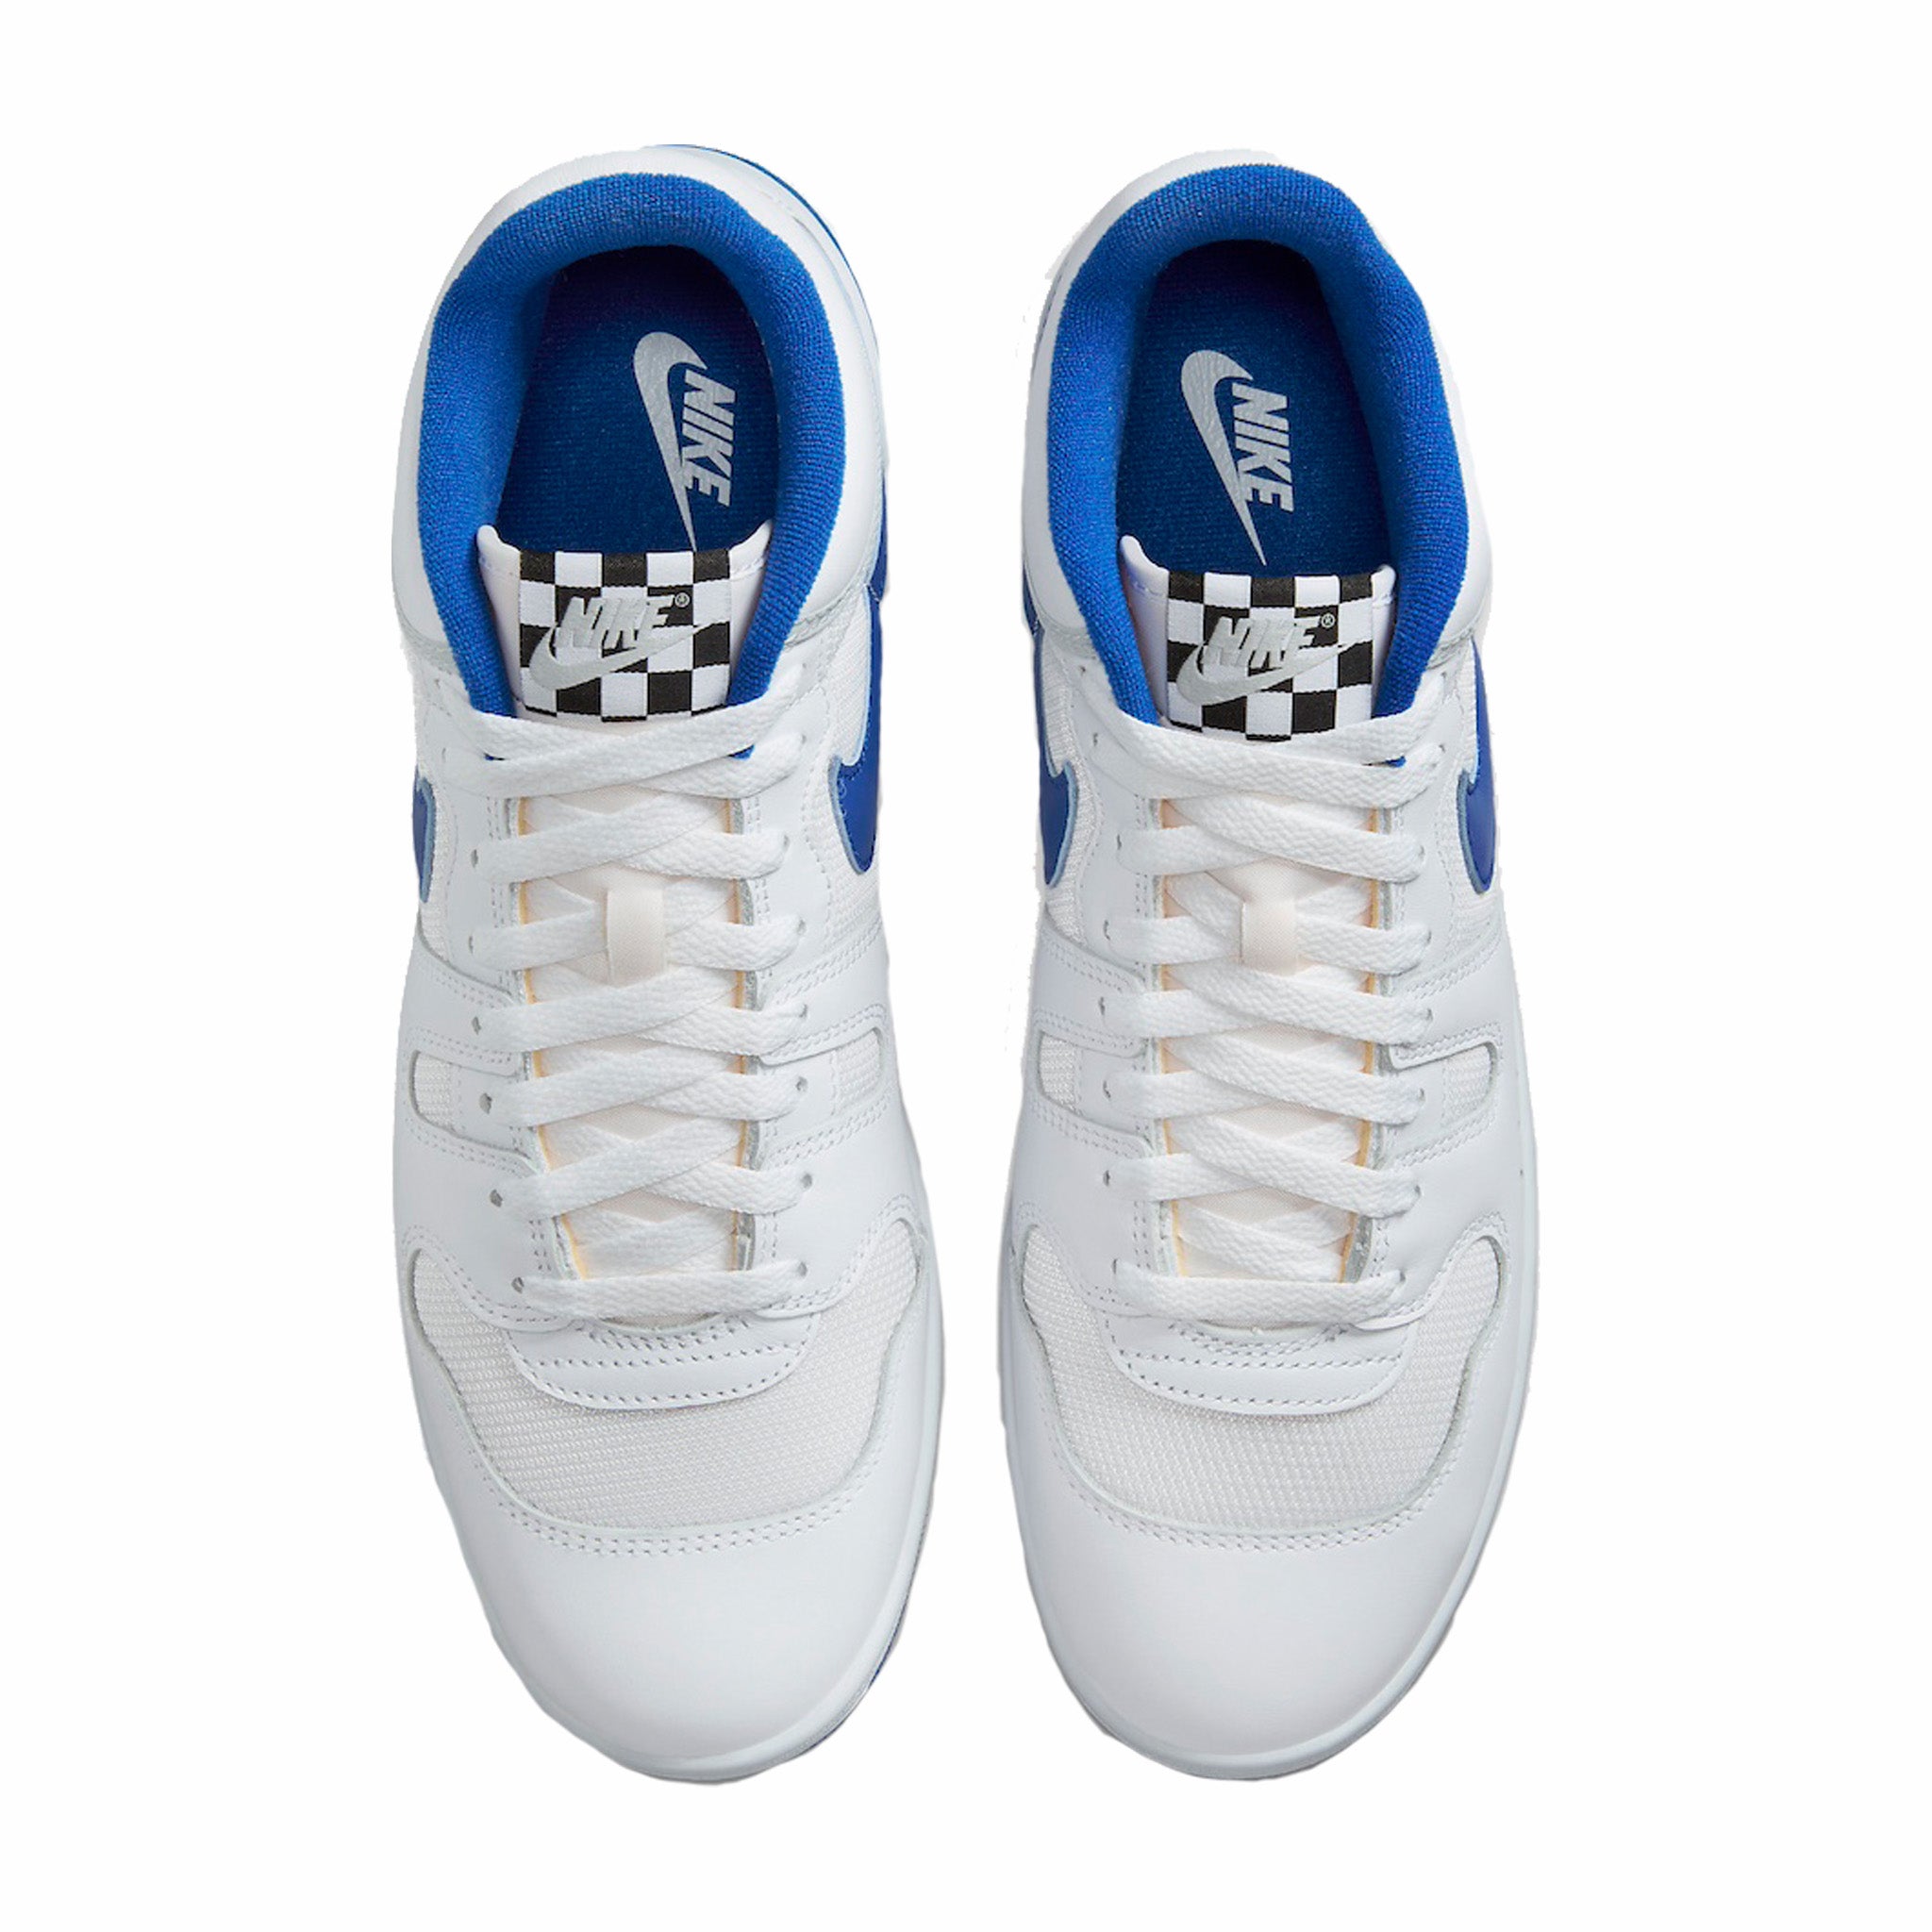 Nike Mac Attack “Game Royal” (White/Game Royal-Pure Platinum-Black) - August Shop